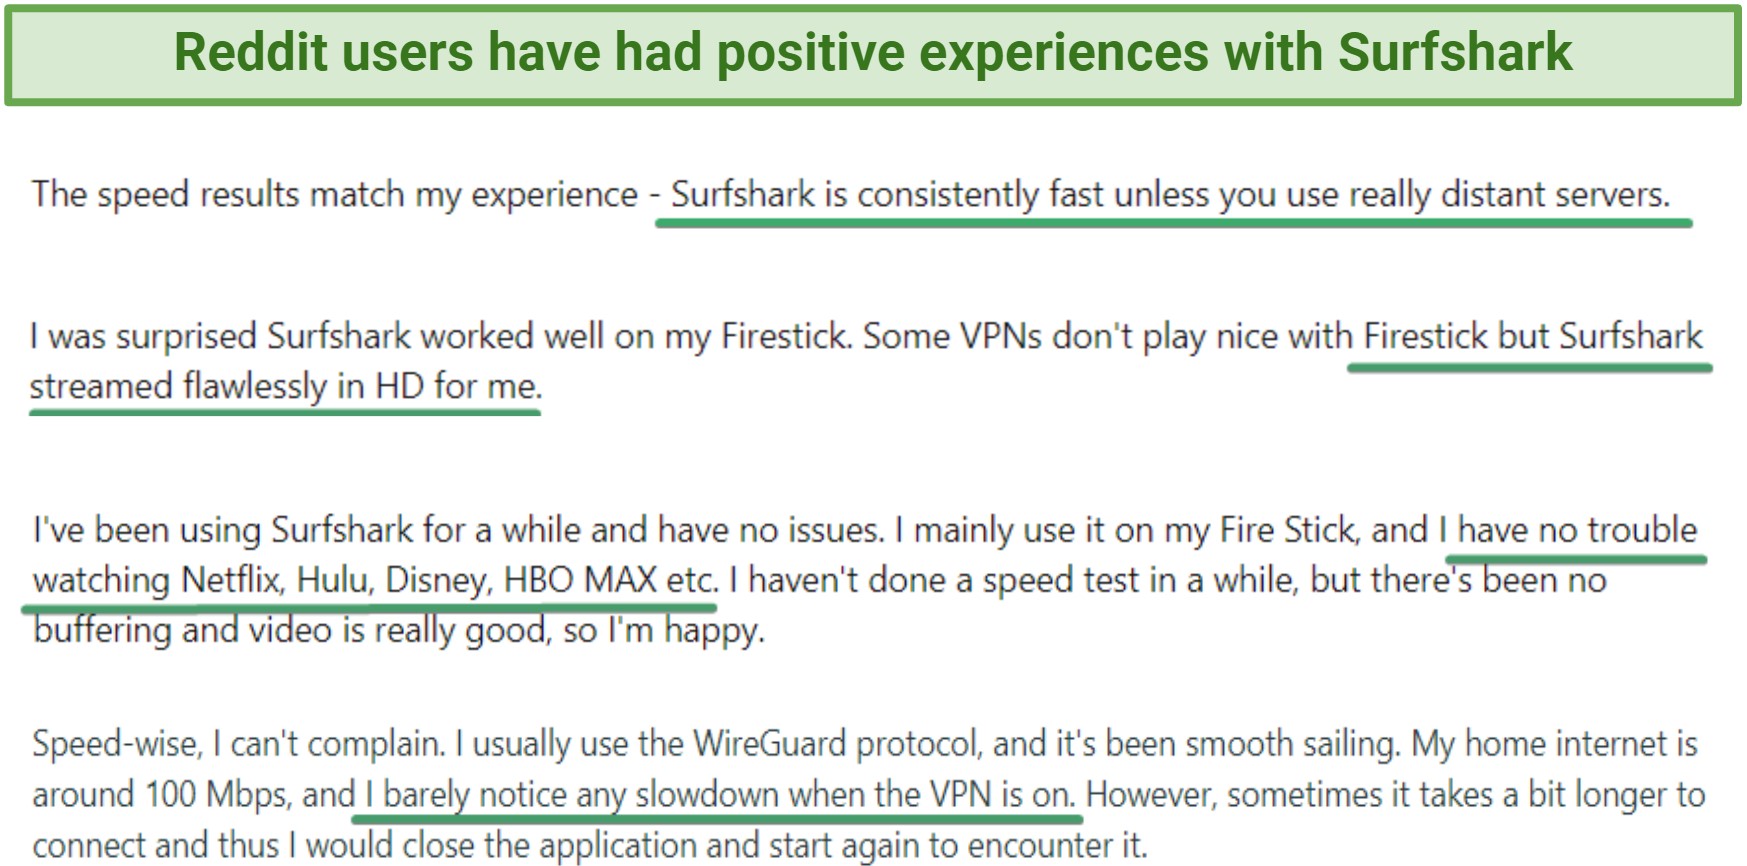 Screenshot highlighting Reddit users' experiences with Surfshark